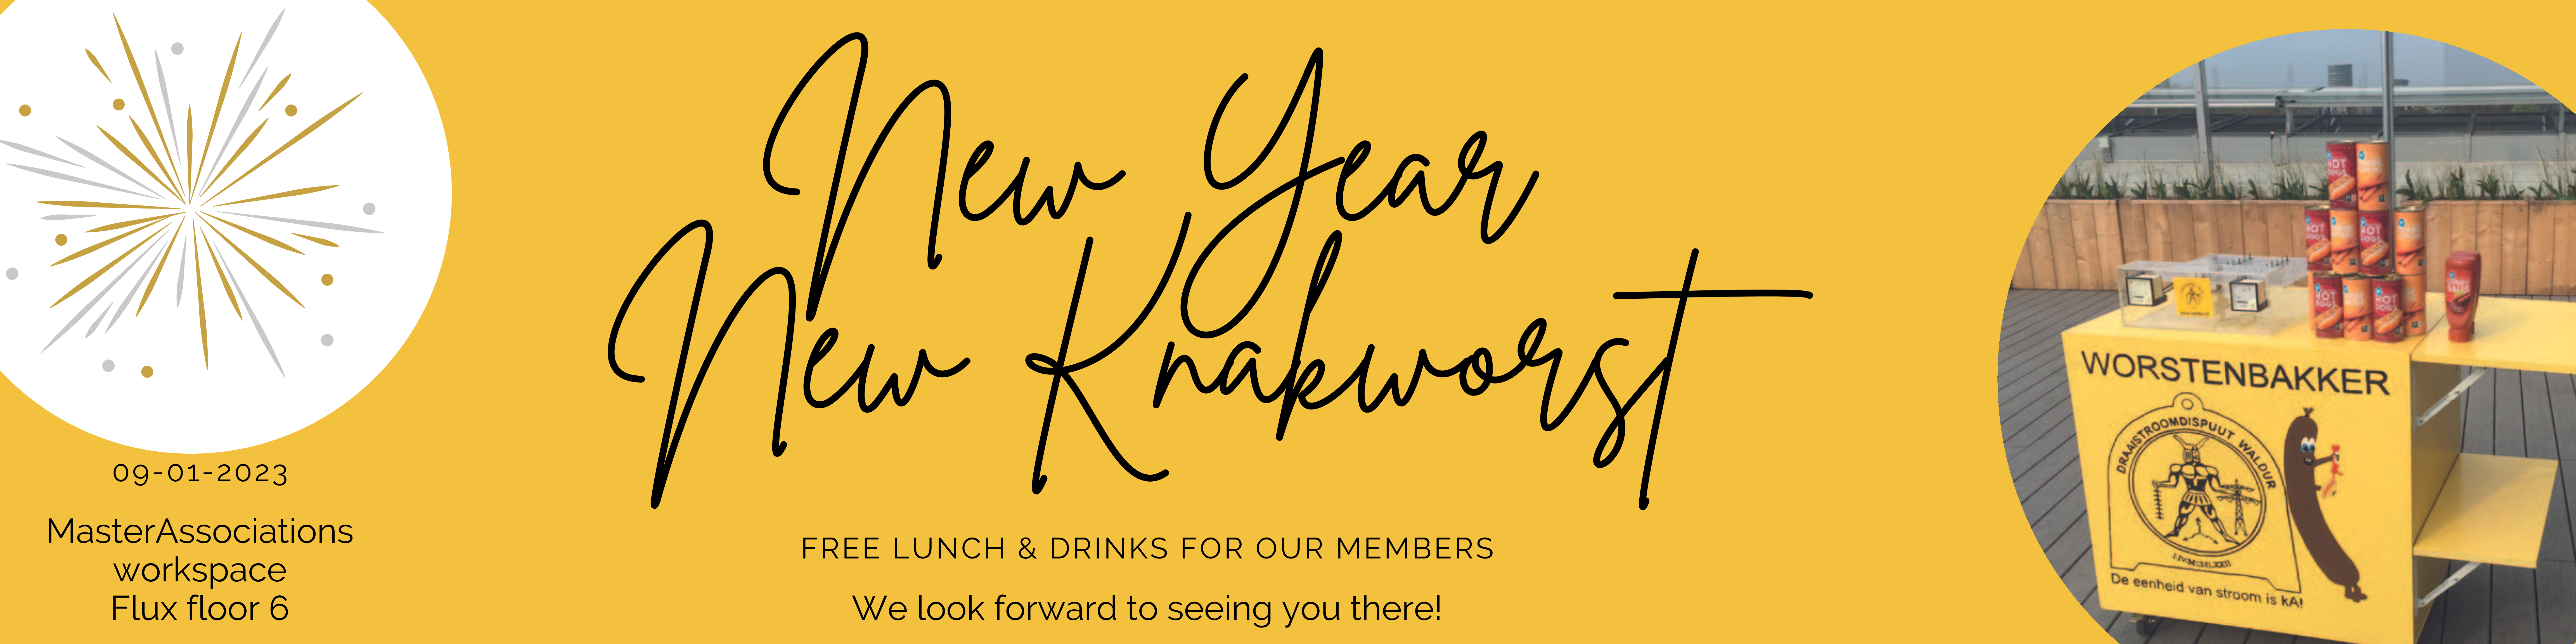 New Year New Knakworst banner